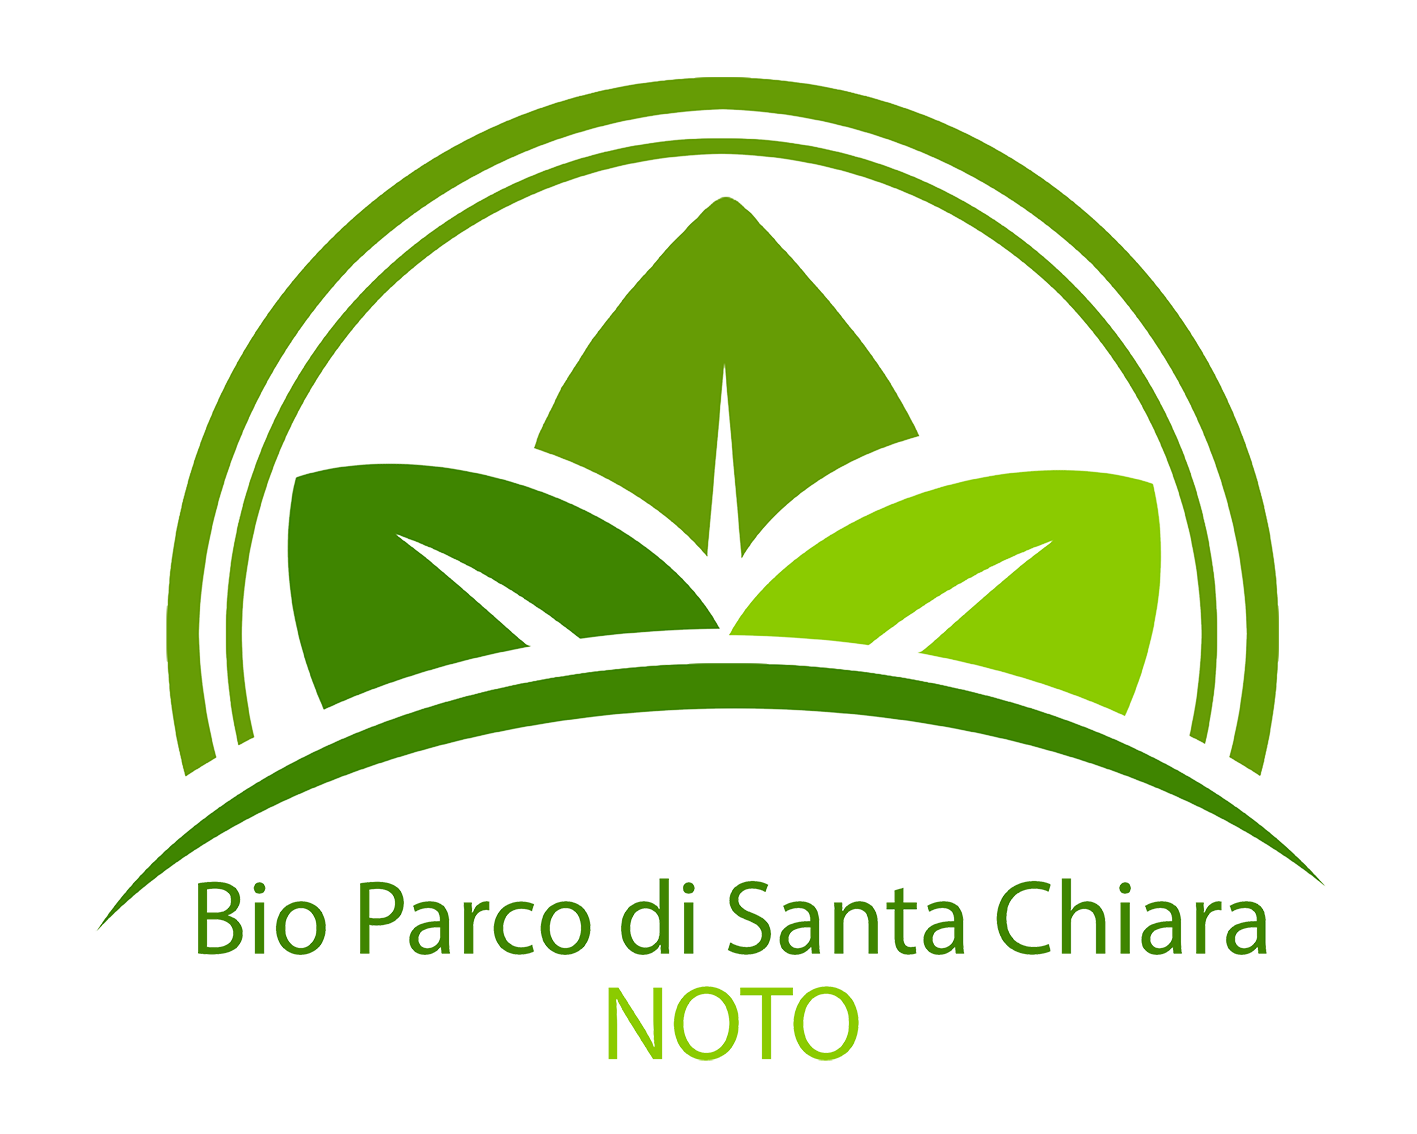 Bio Parco di Santa Chiara